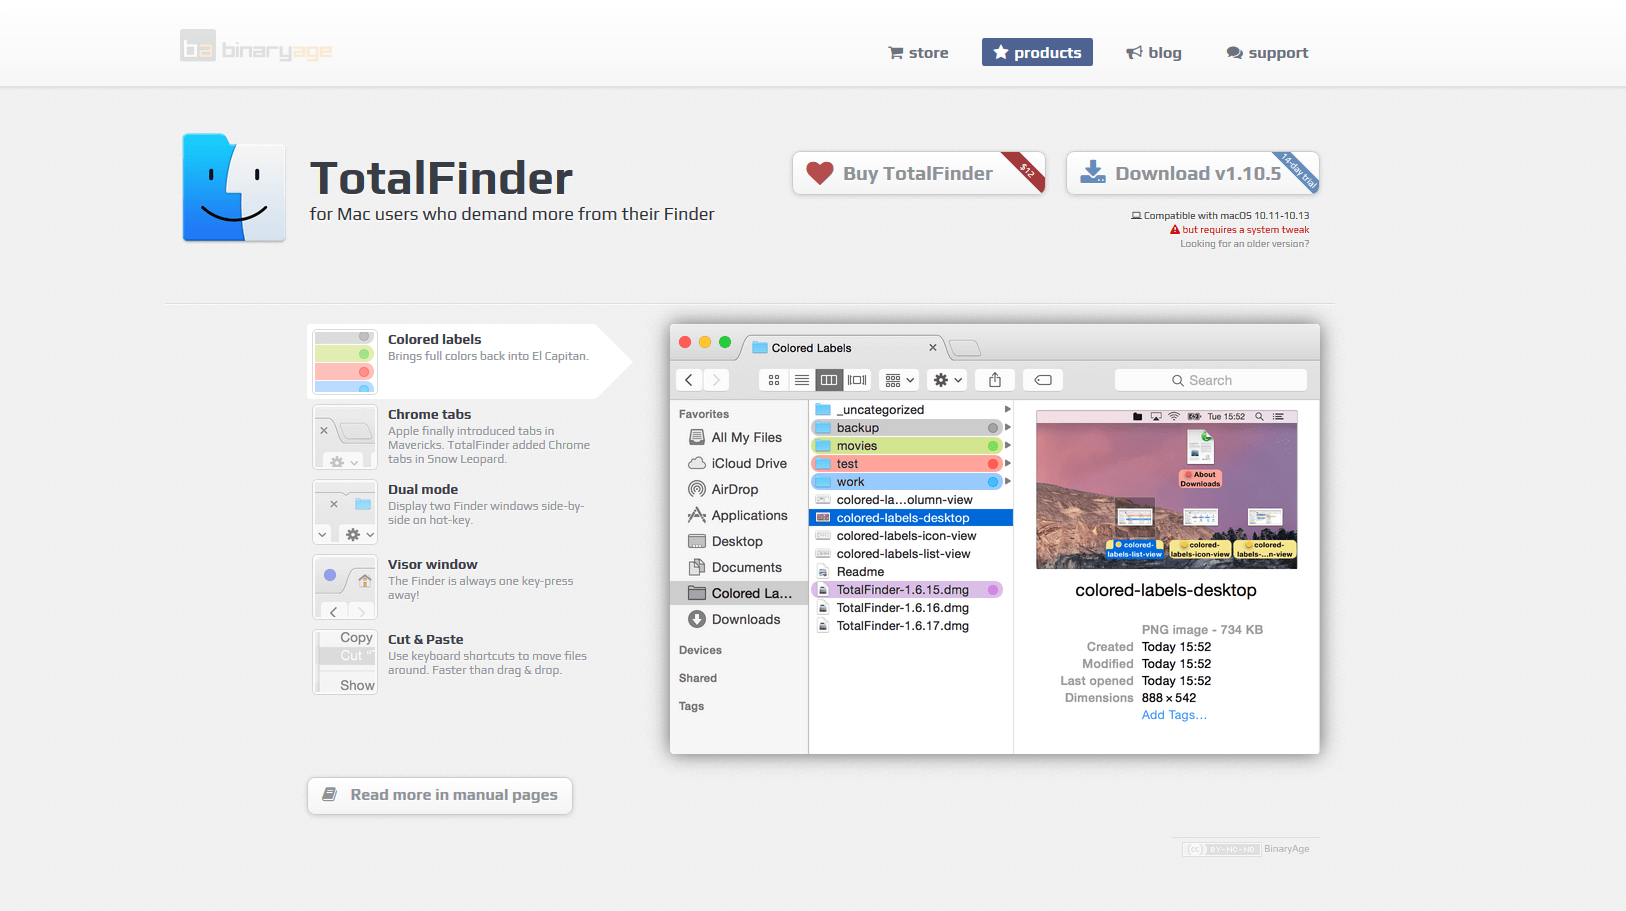 Product website for the Finder extension, TotalFinder